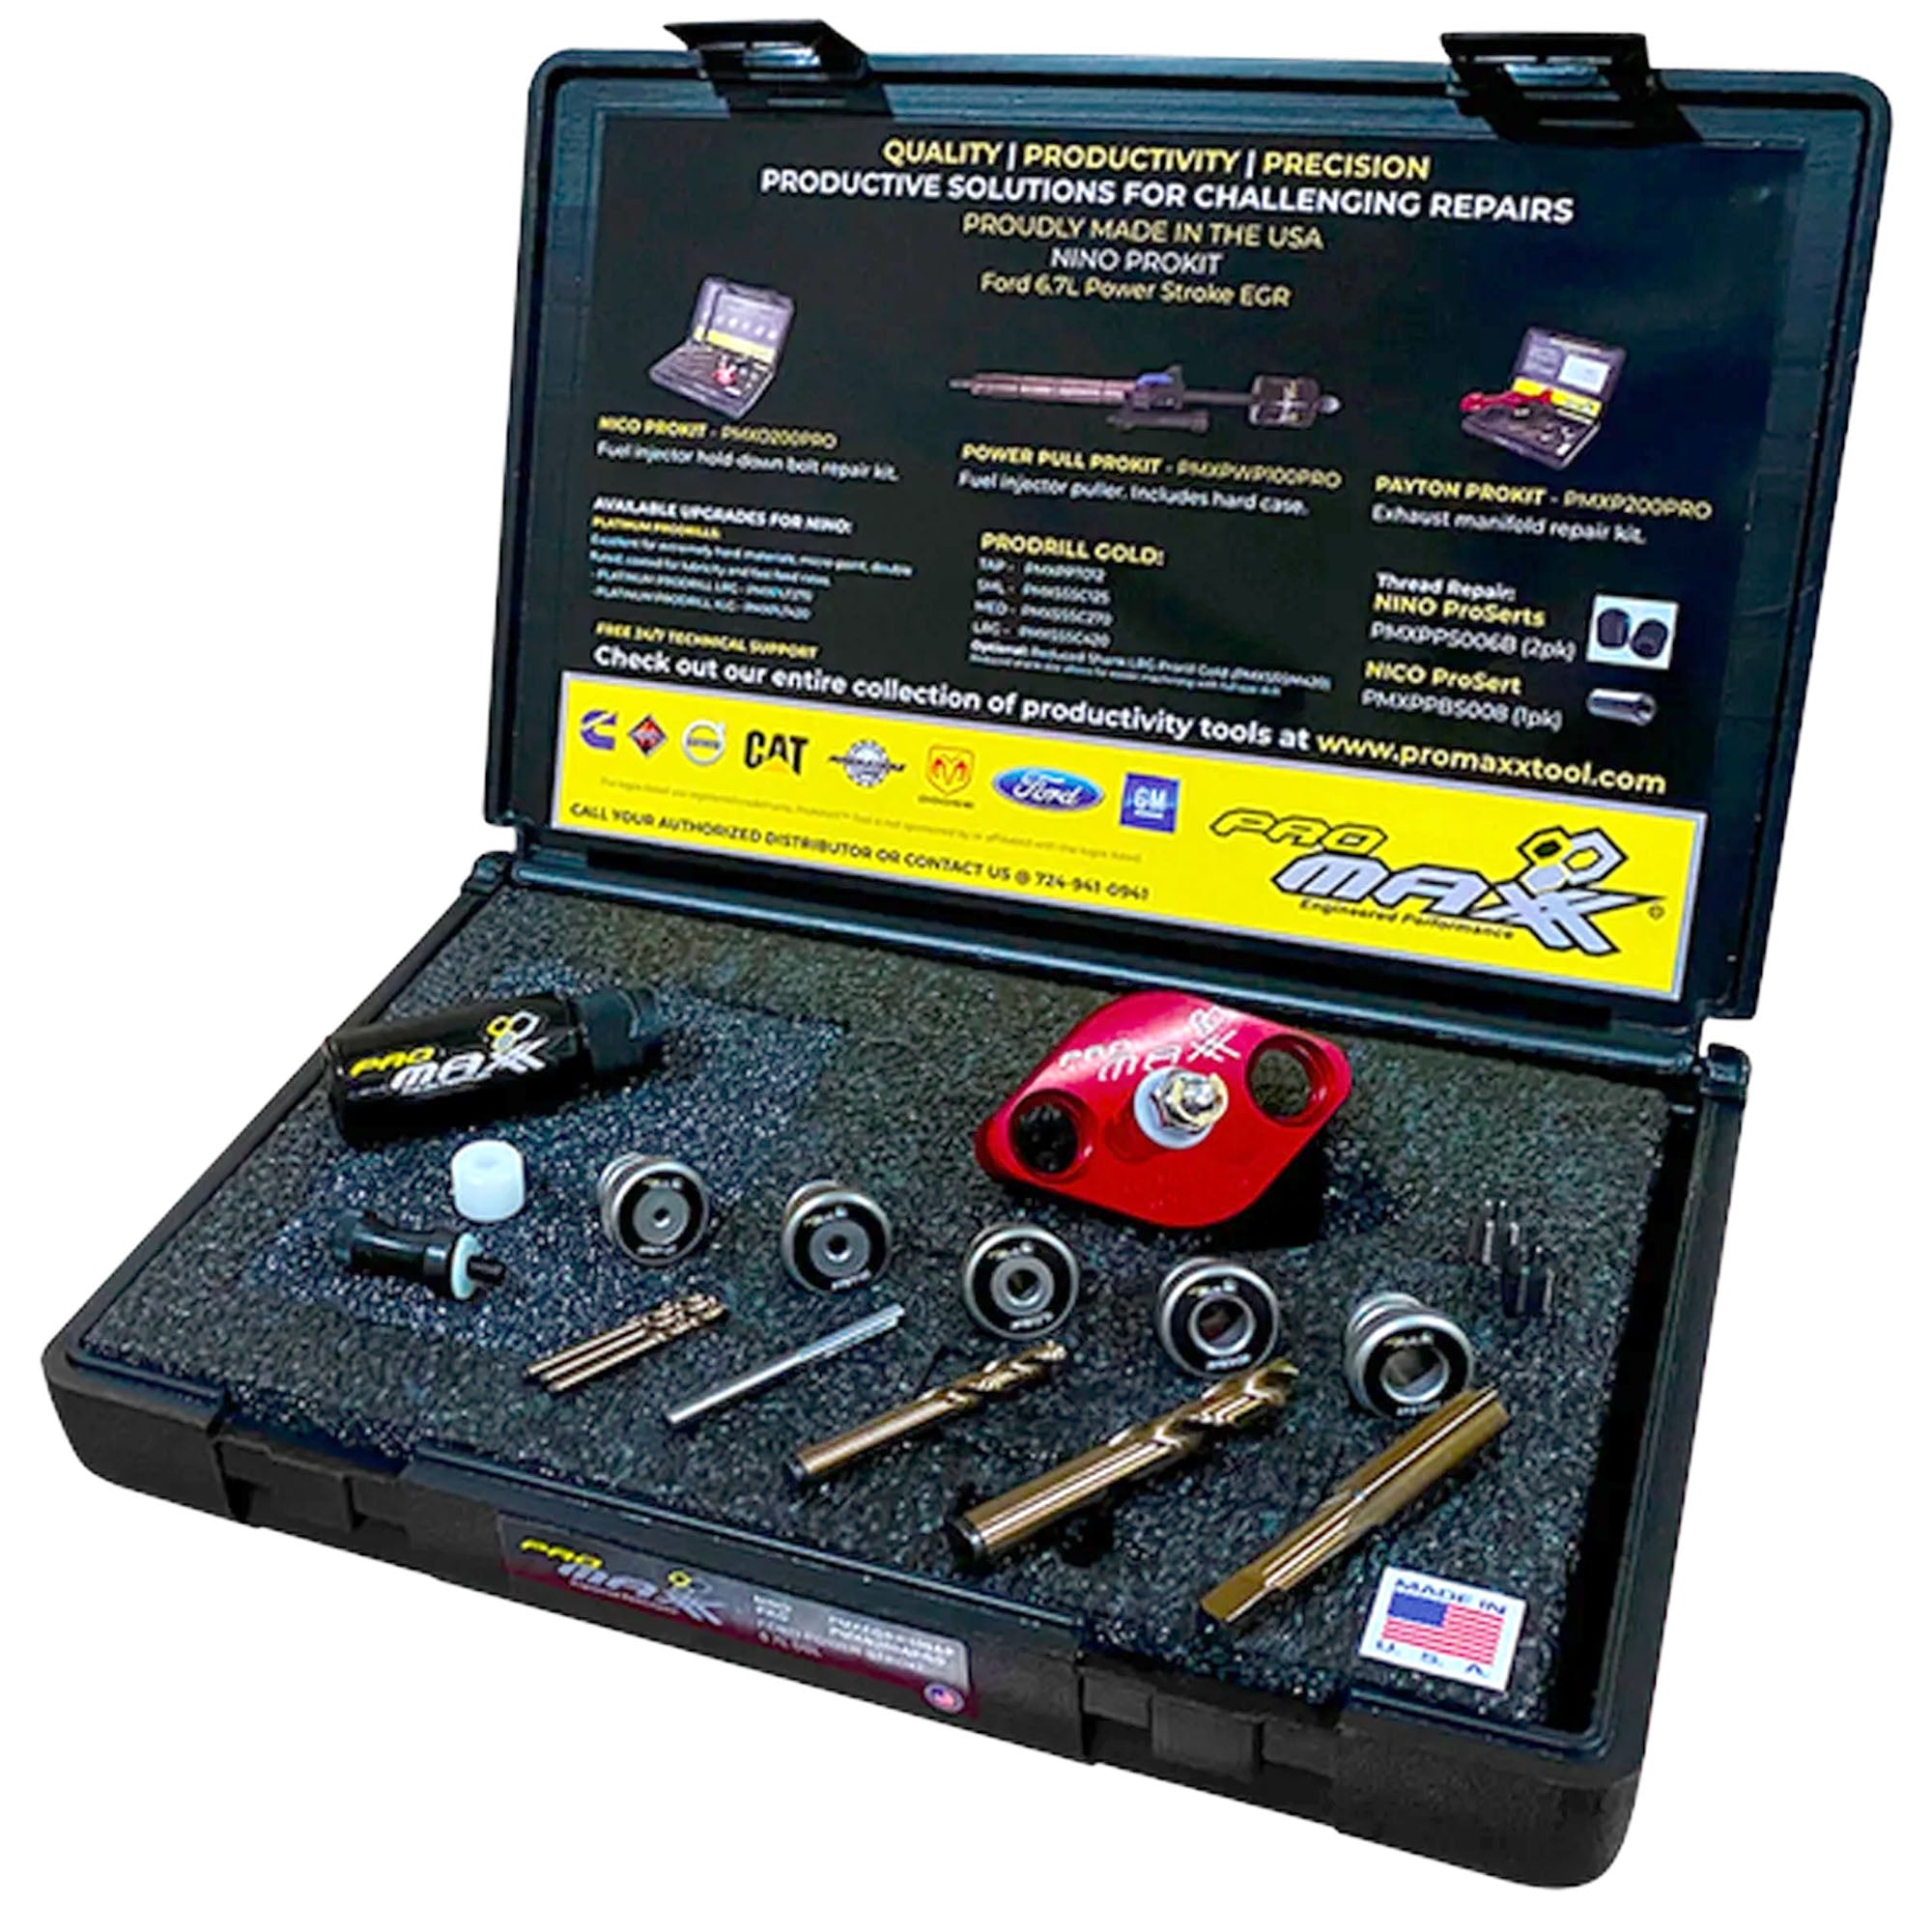 Fuji EGRKC Emergency Rod Repair Kit